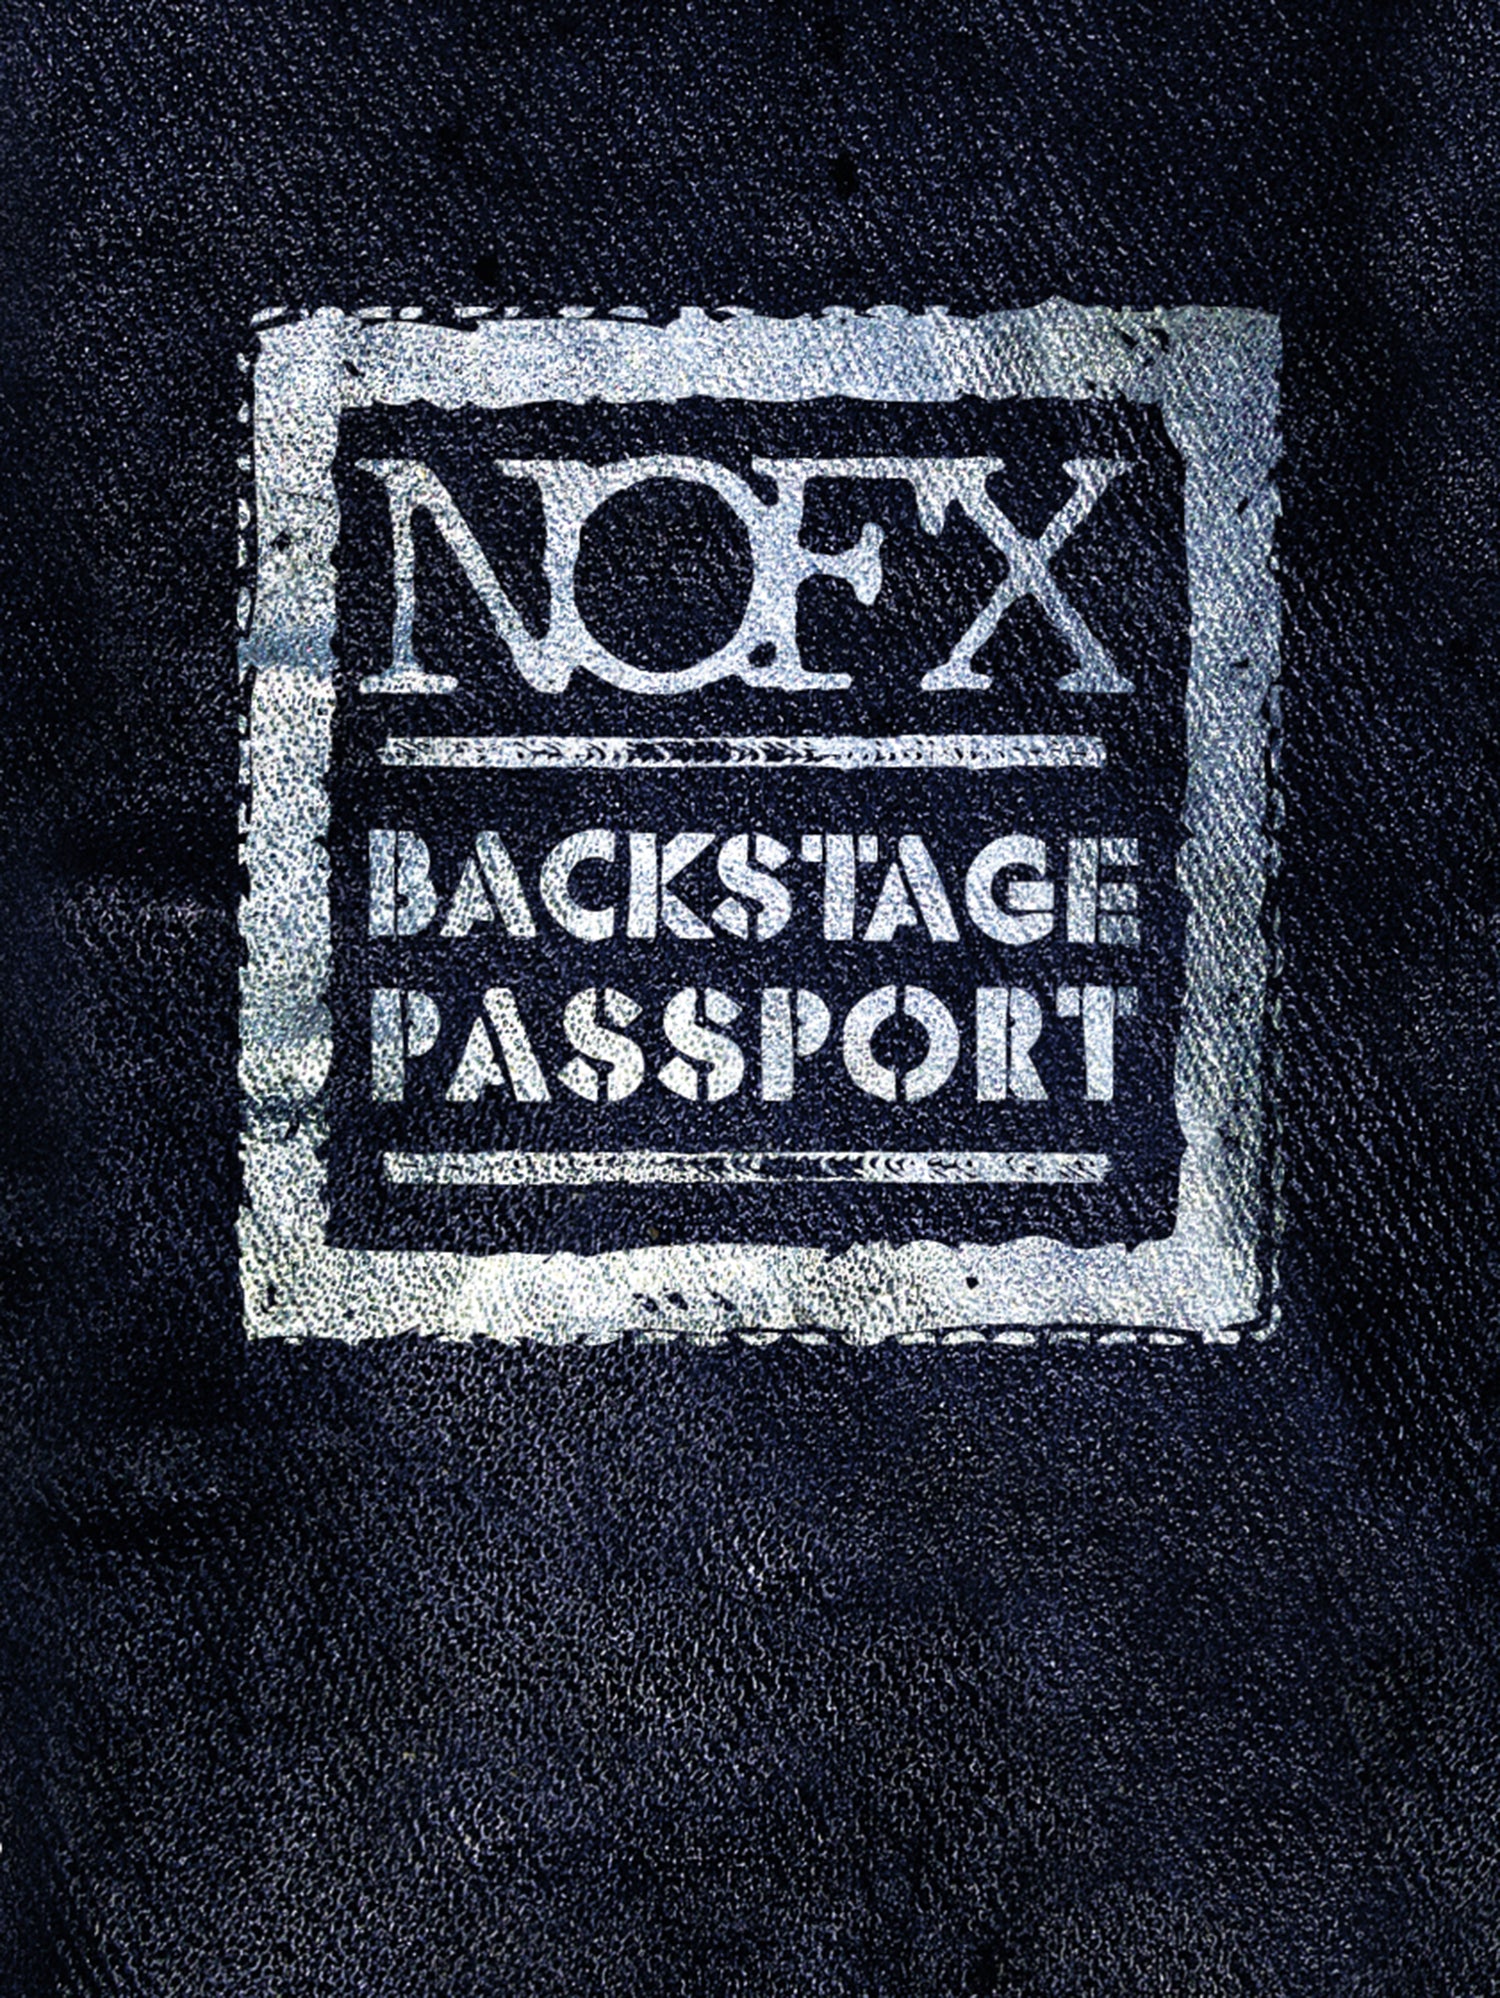 Backstage Passport